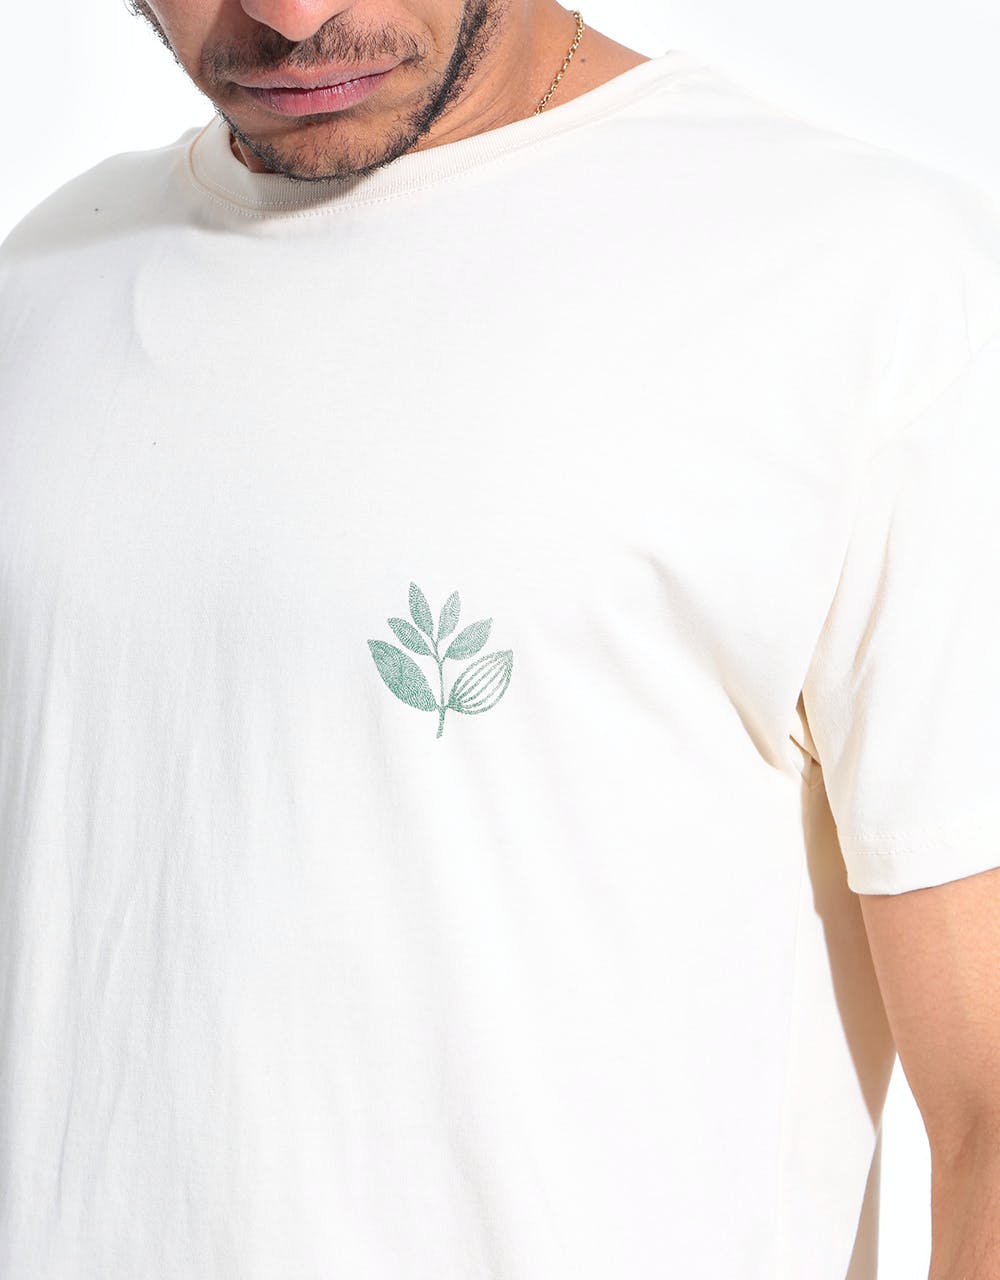 Magenta Points Plant T-Shirt - Natural